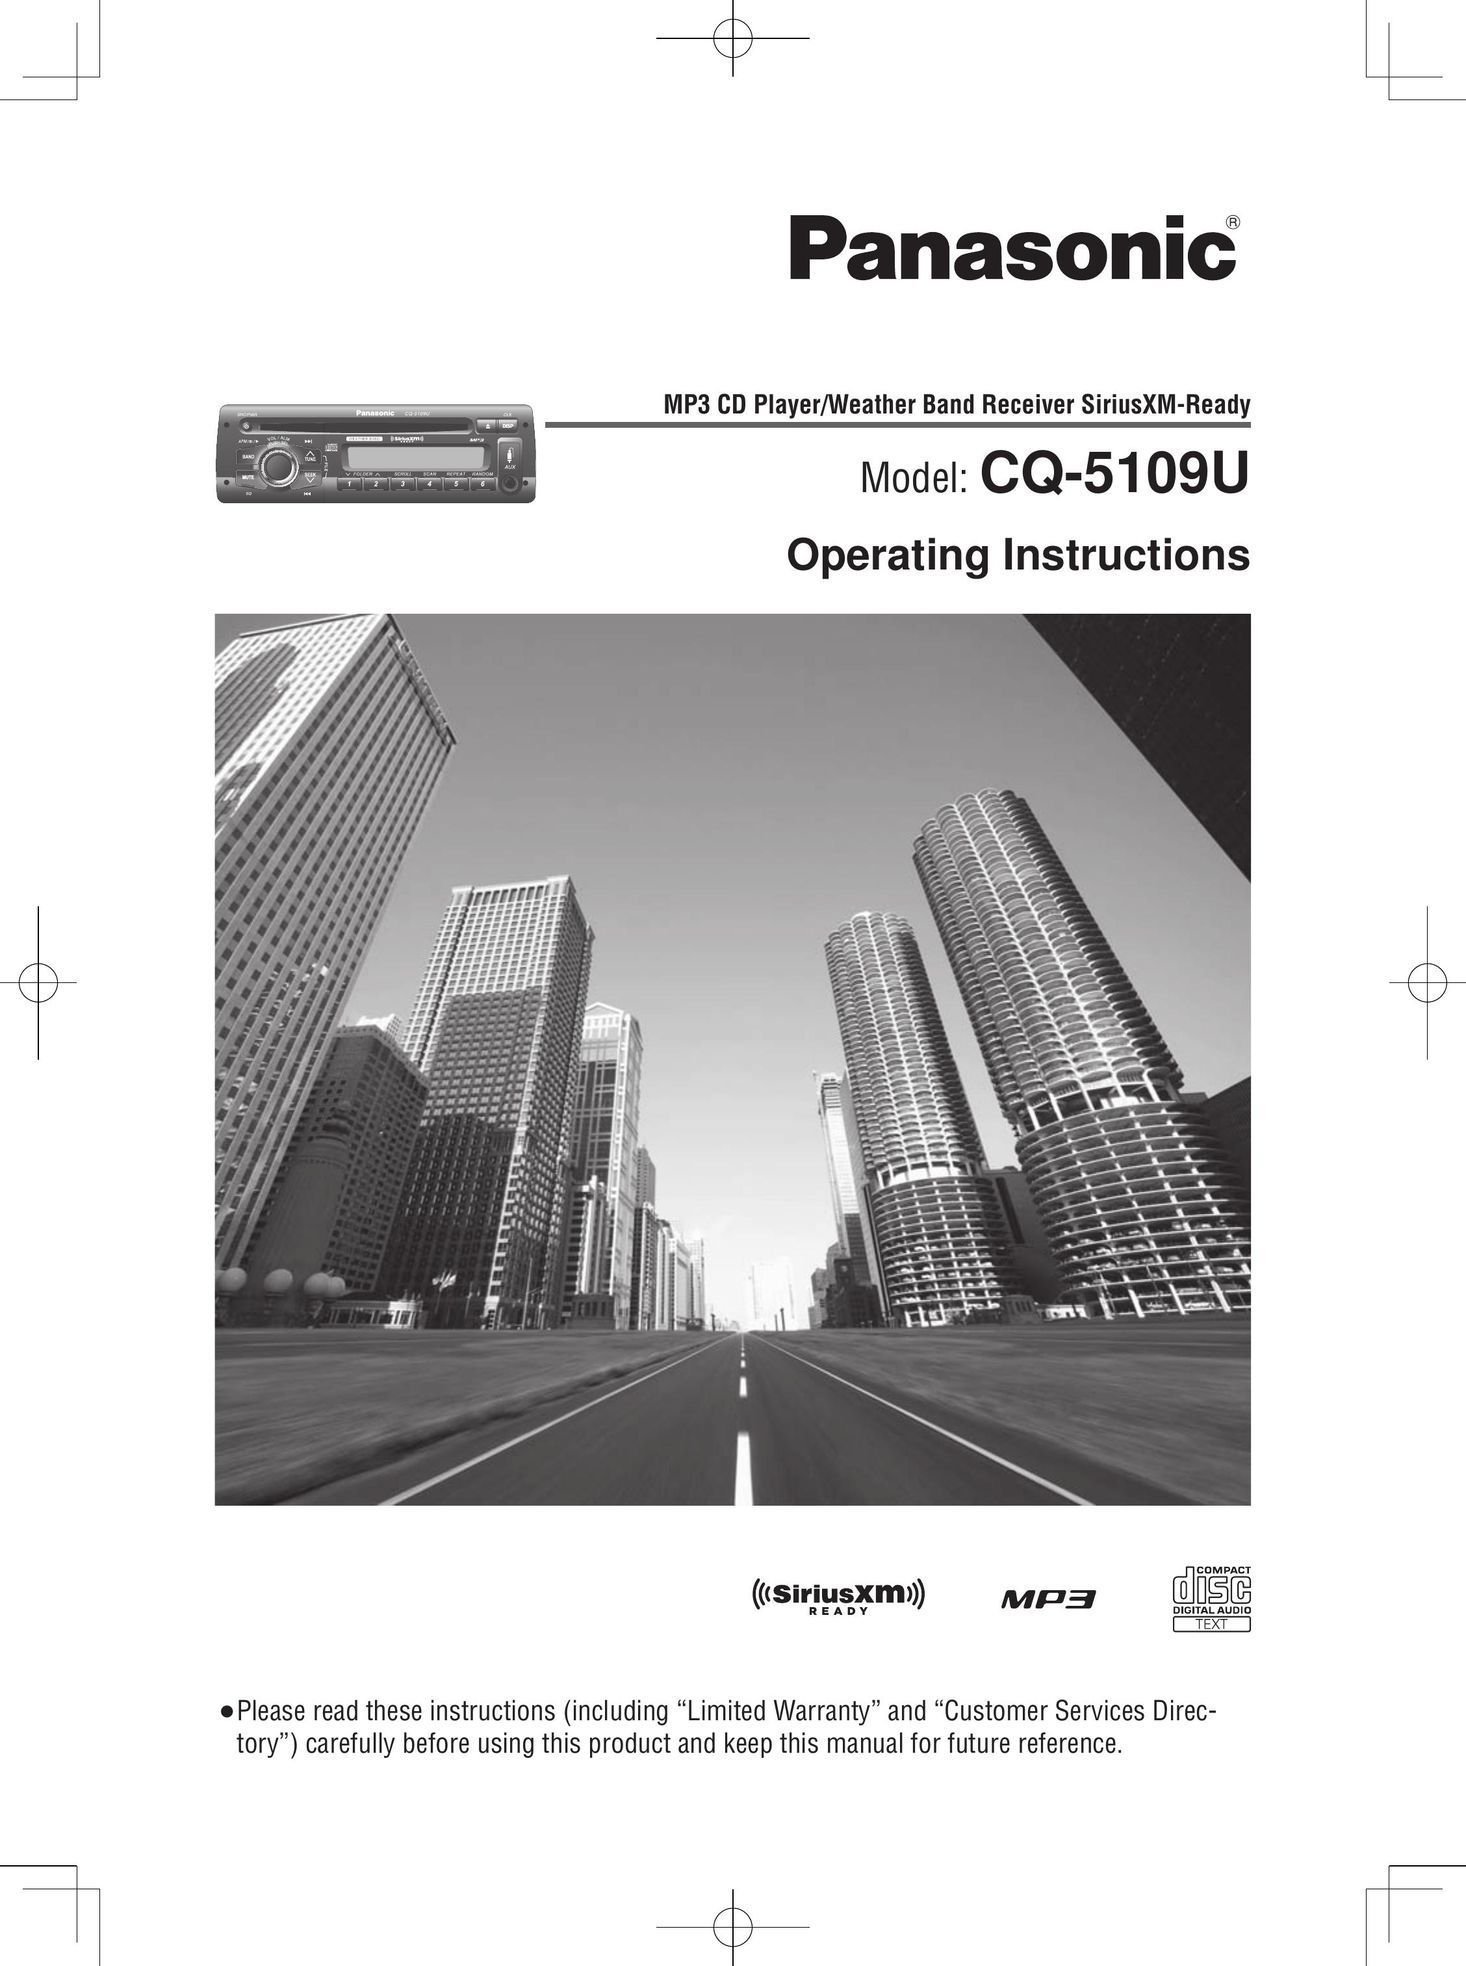 Panasonic CQ-5109U Car Stereo System User Manual